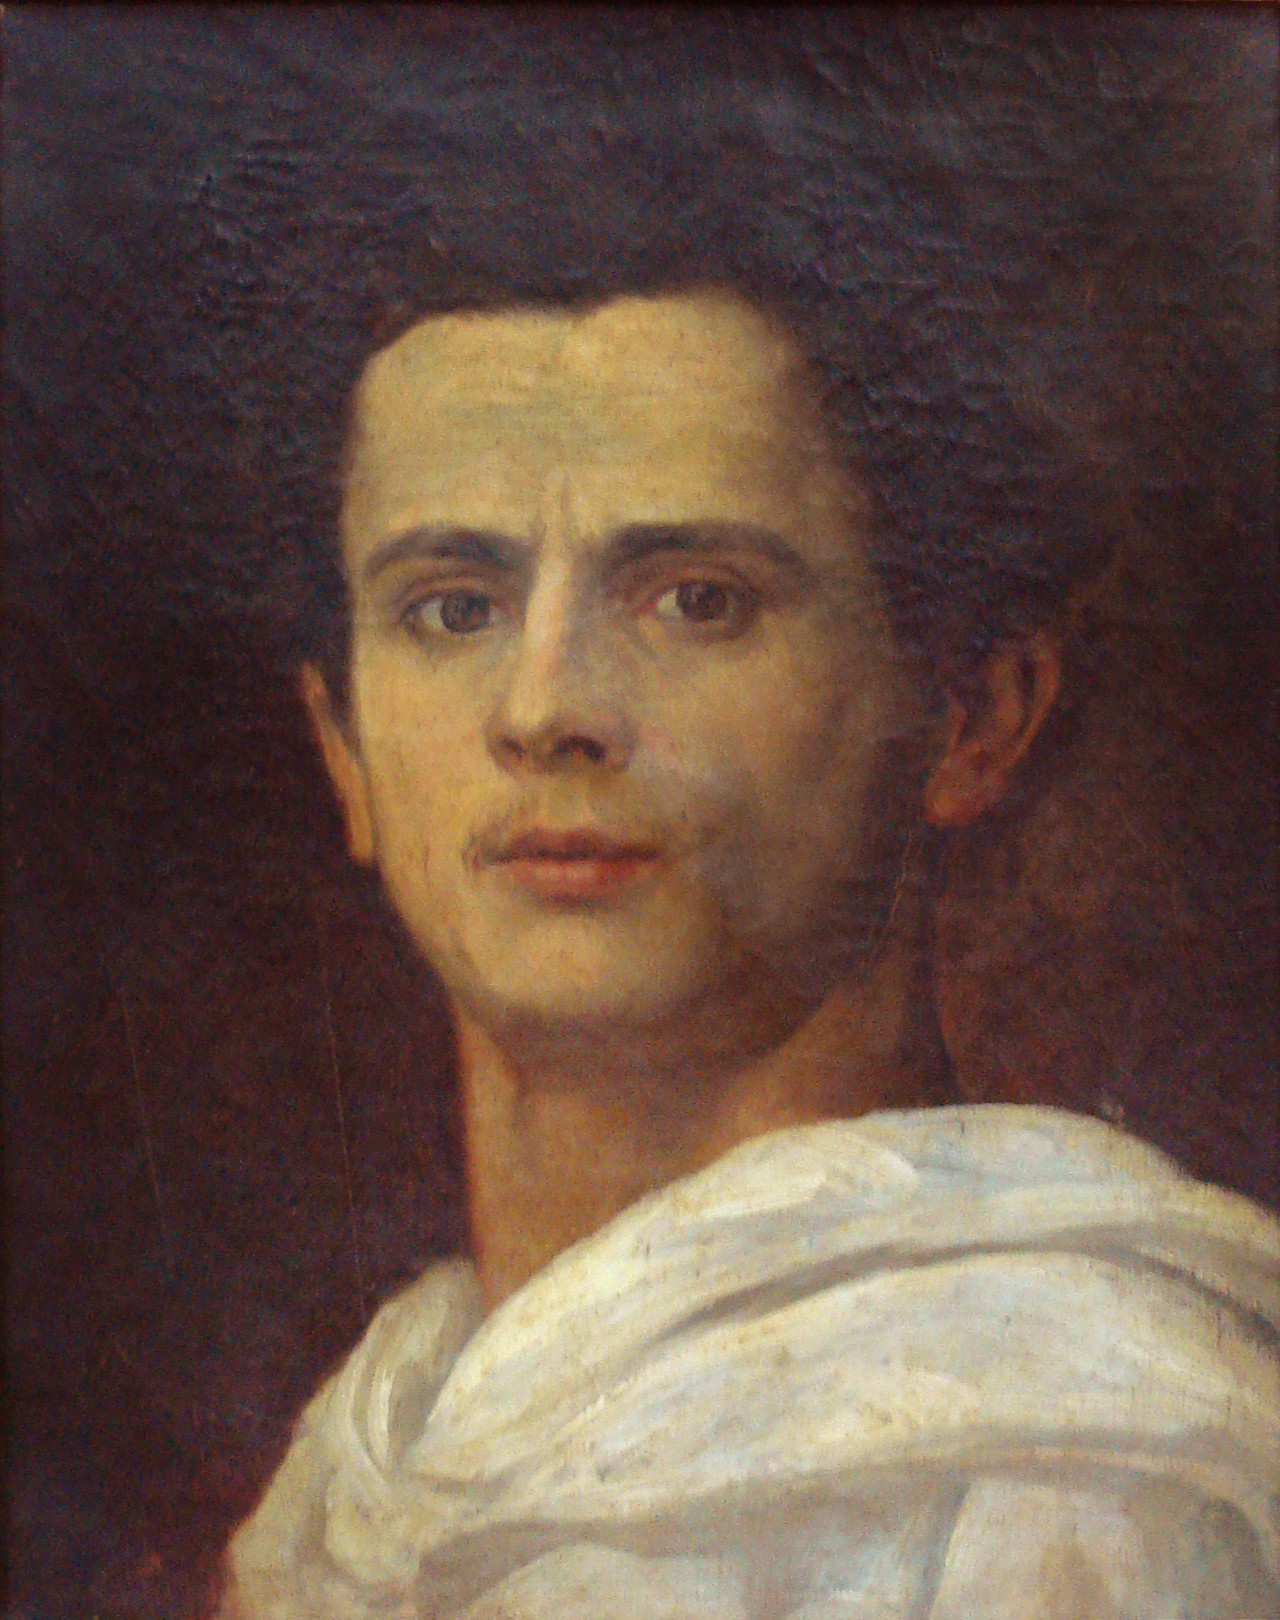 Jose Ferraz Almeida Júnior - 8 Mayıs 1850 - 13 Kasım 1899